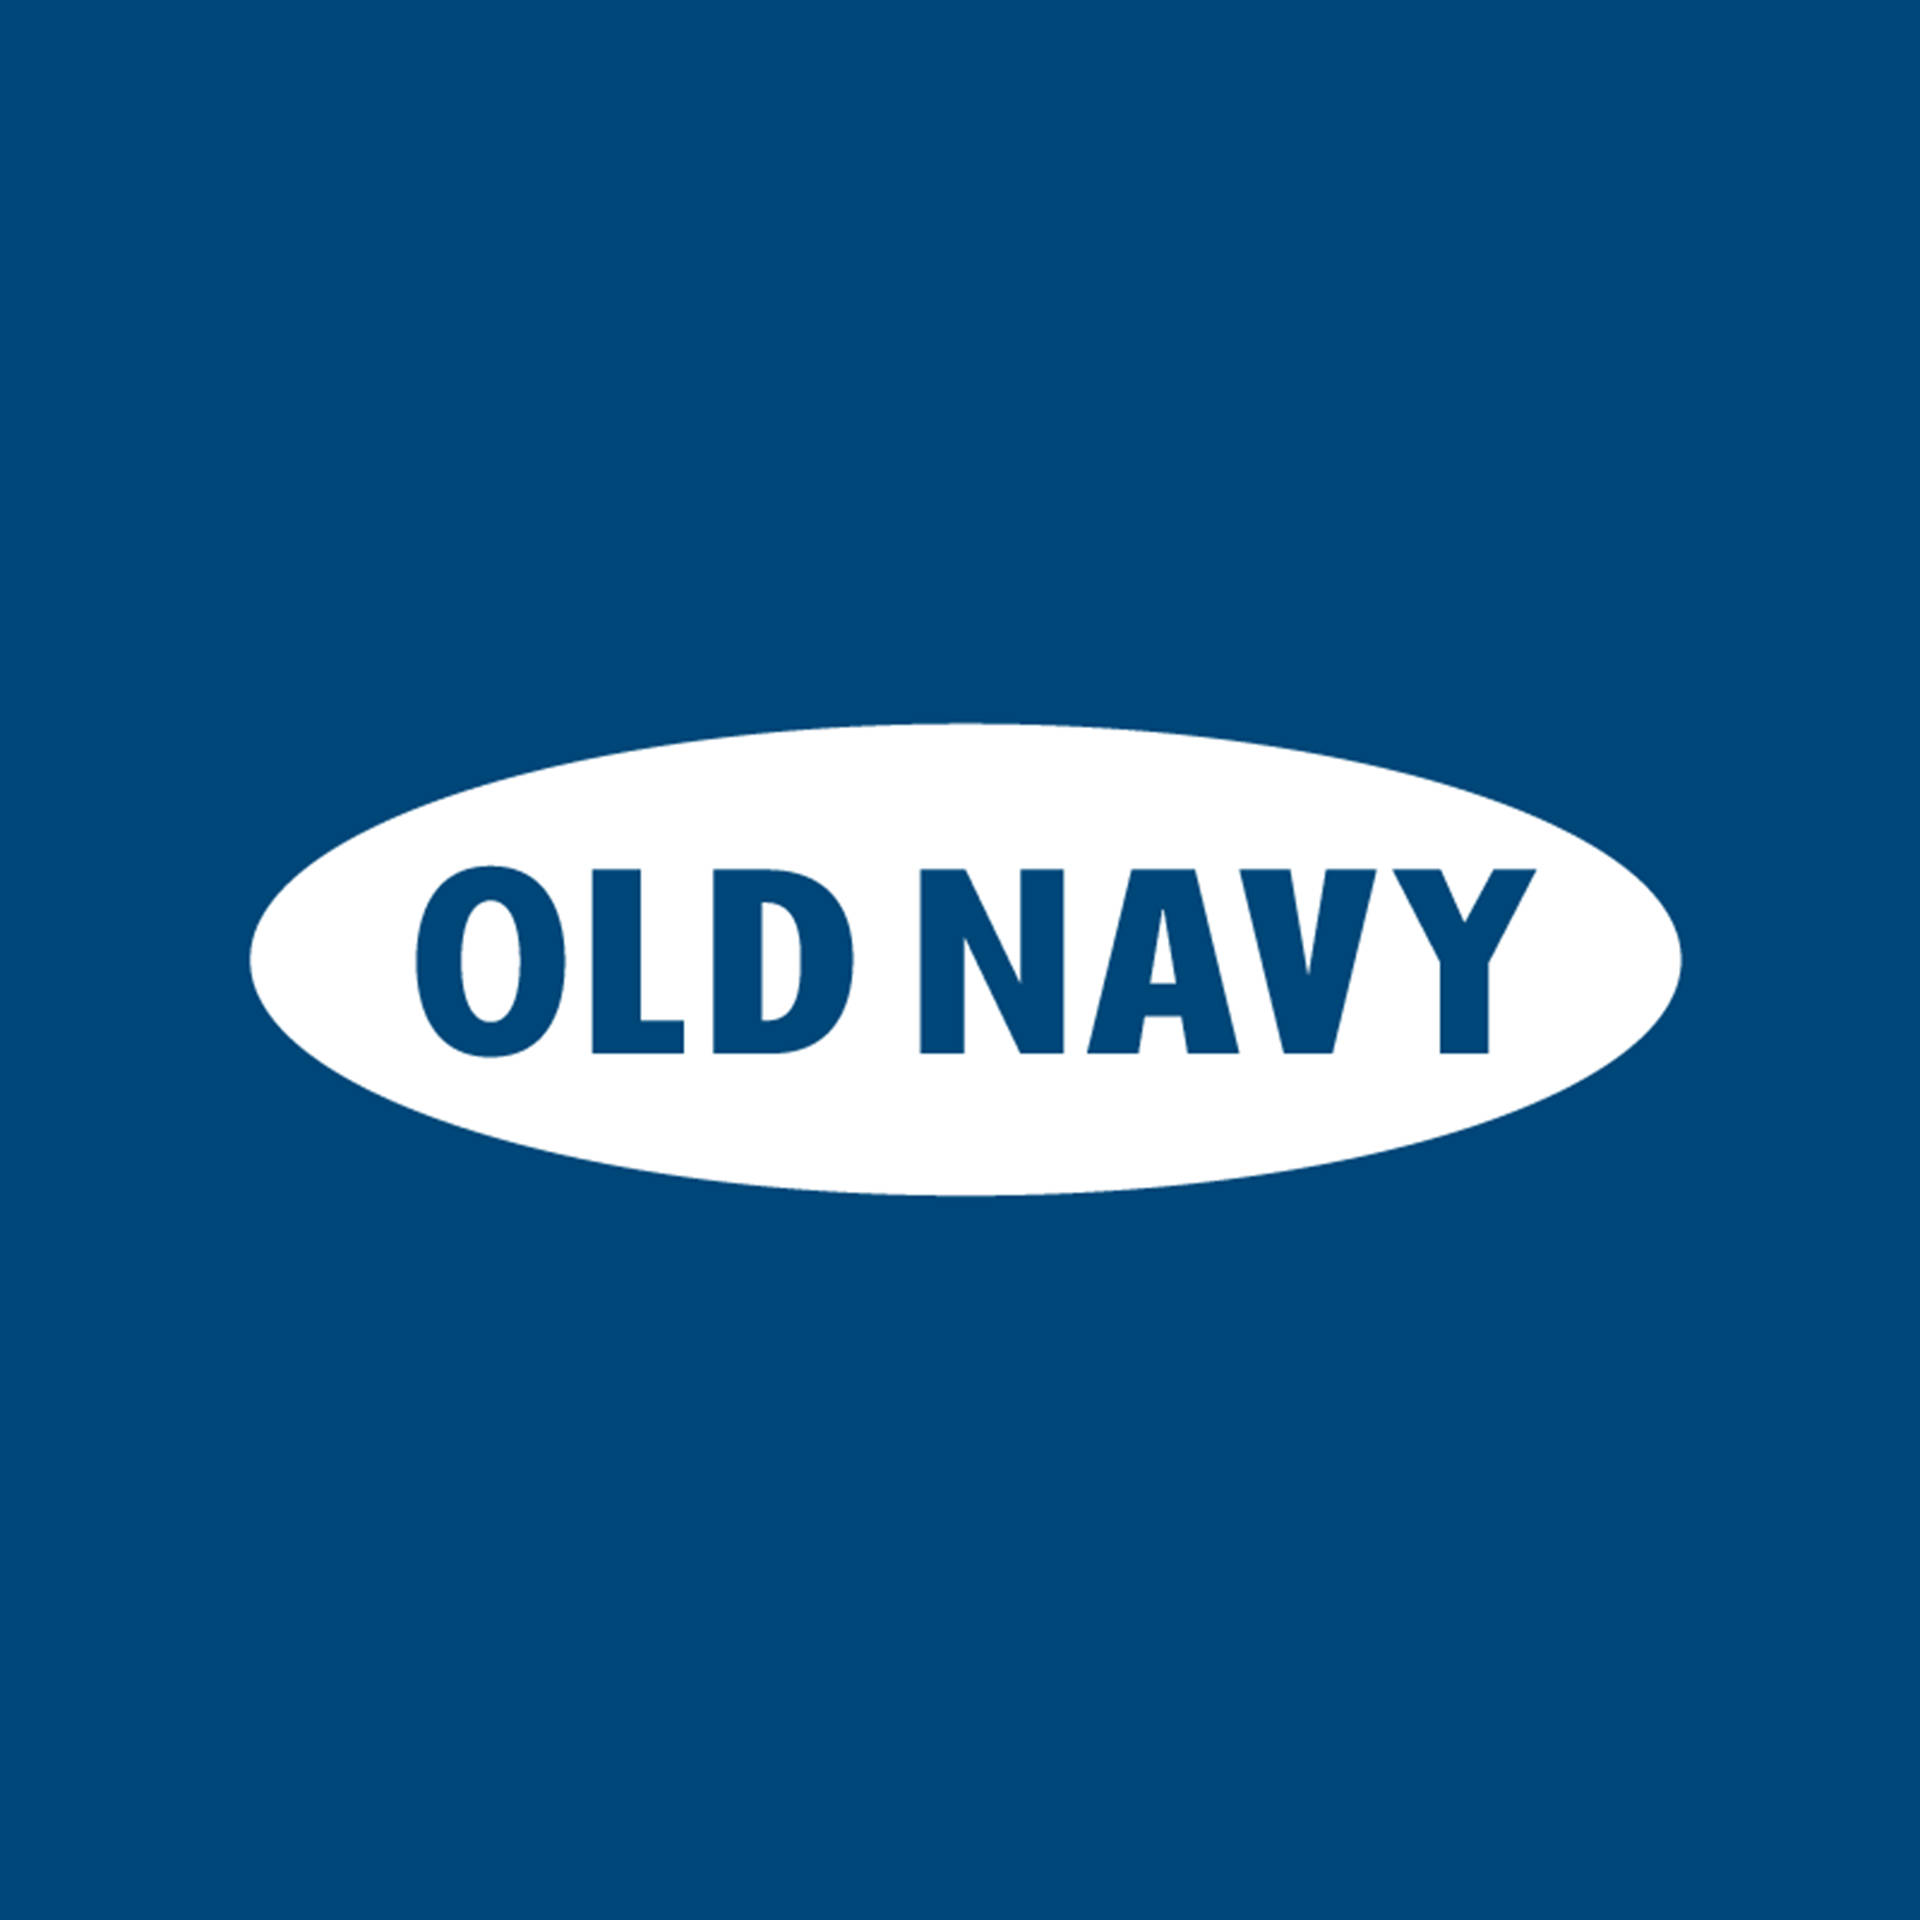 Old Navy Blue Circular Logo Wallpaper